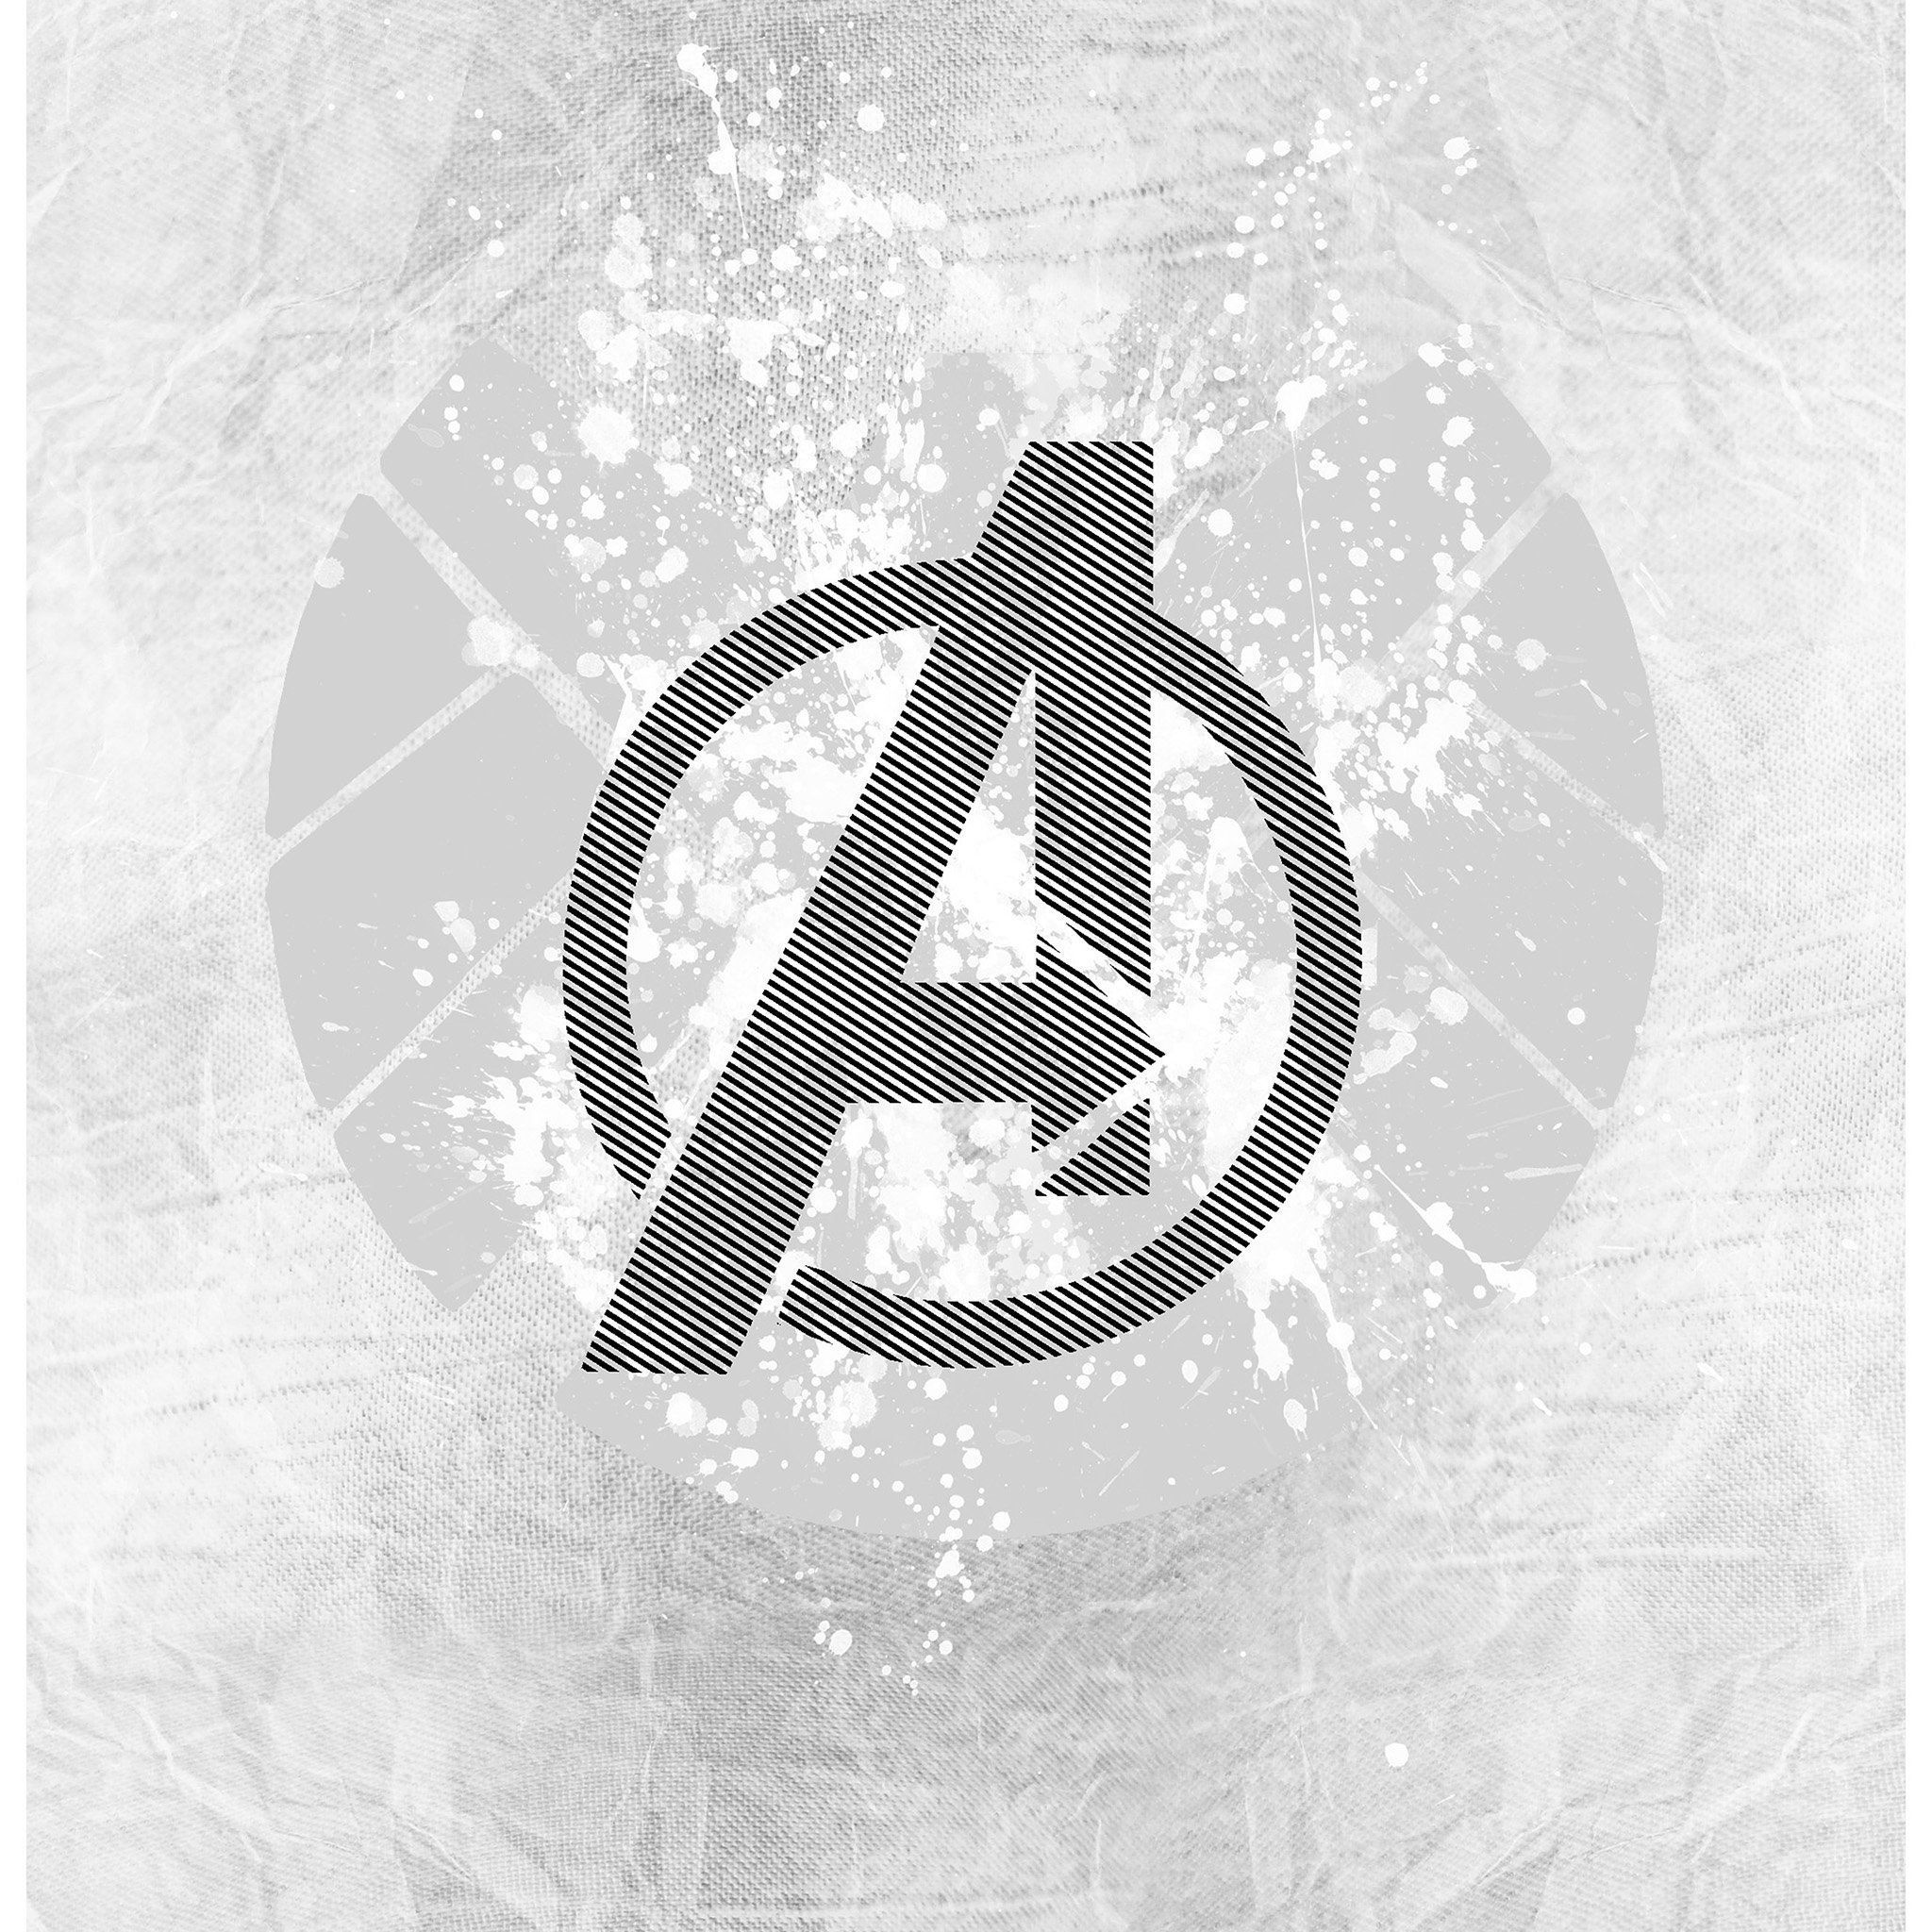 The Avengers logo on a white background - Avengers